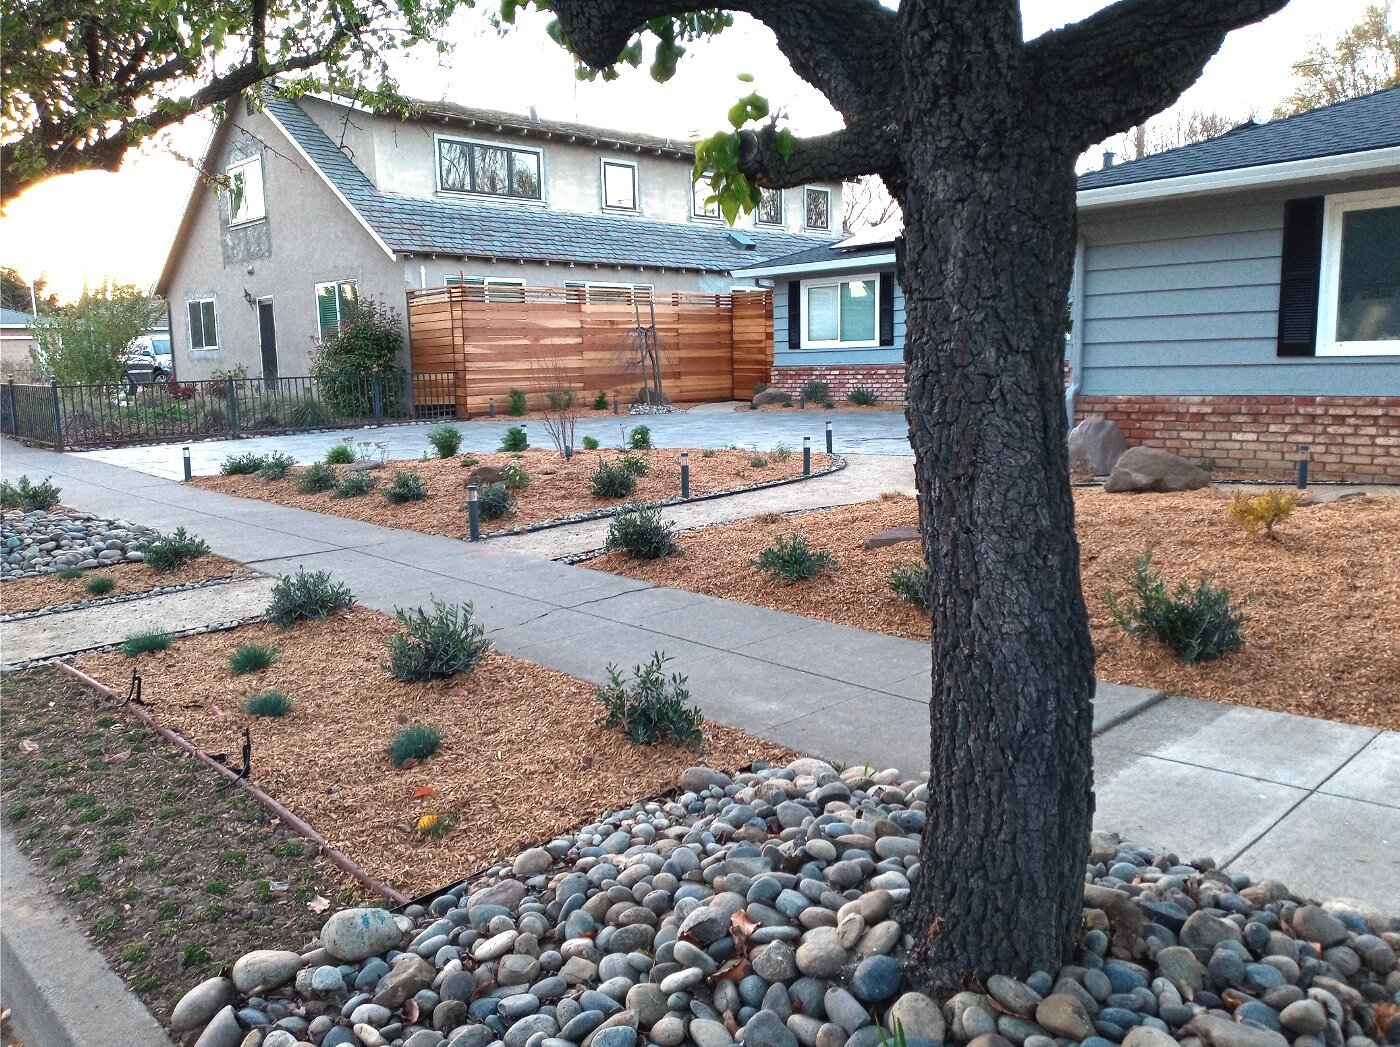 A Yardzen yard with a xeriscape front yard, featuring bark mulch.